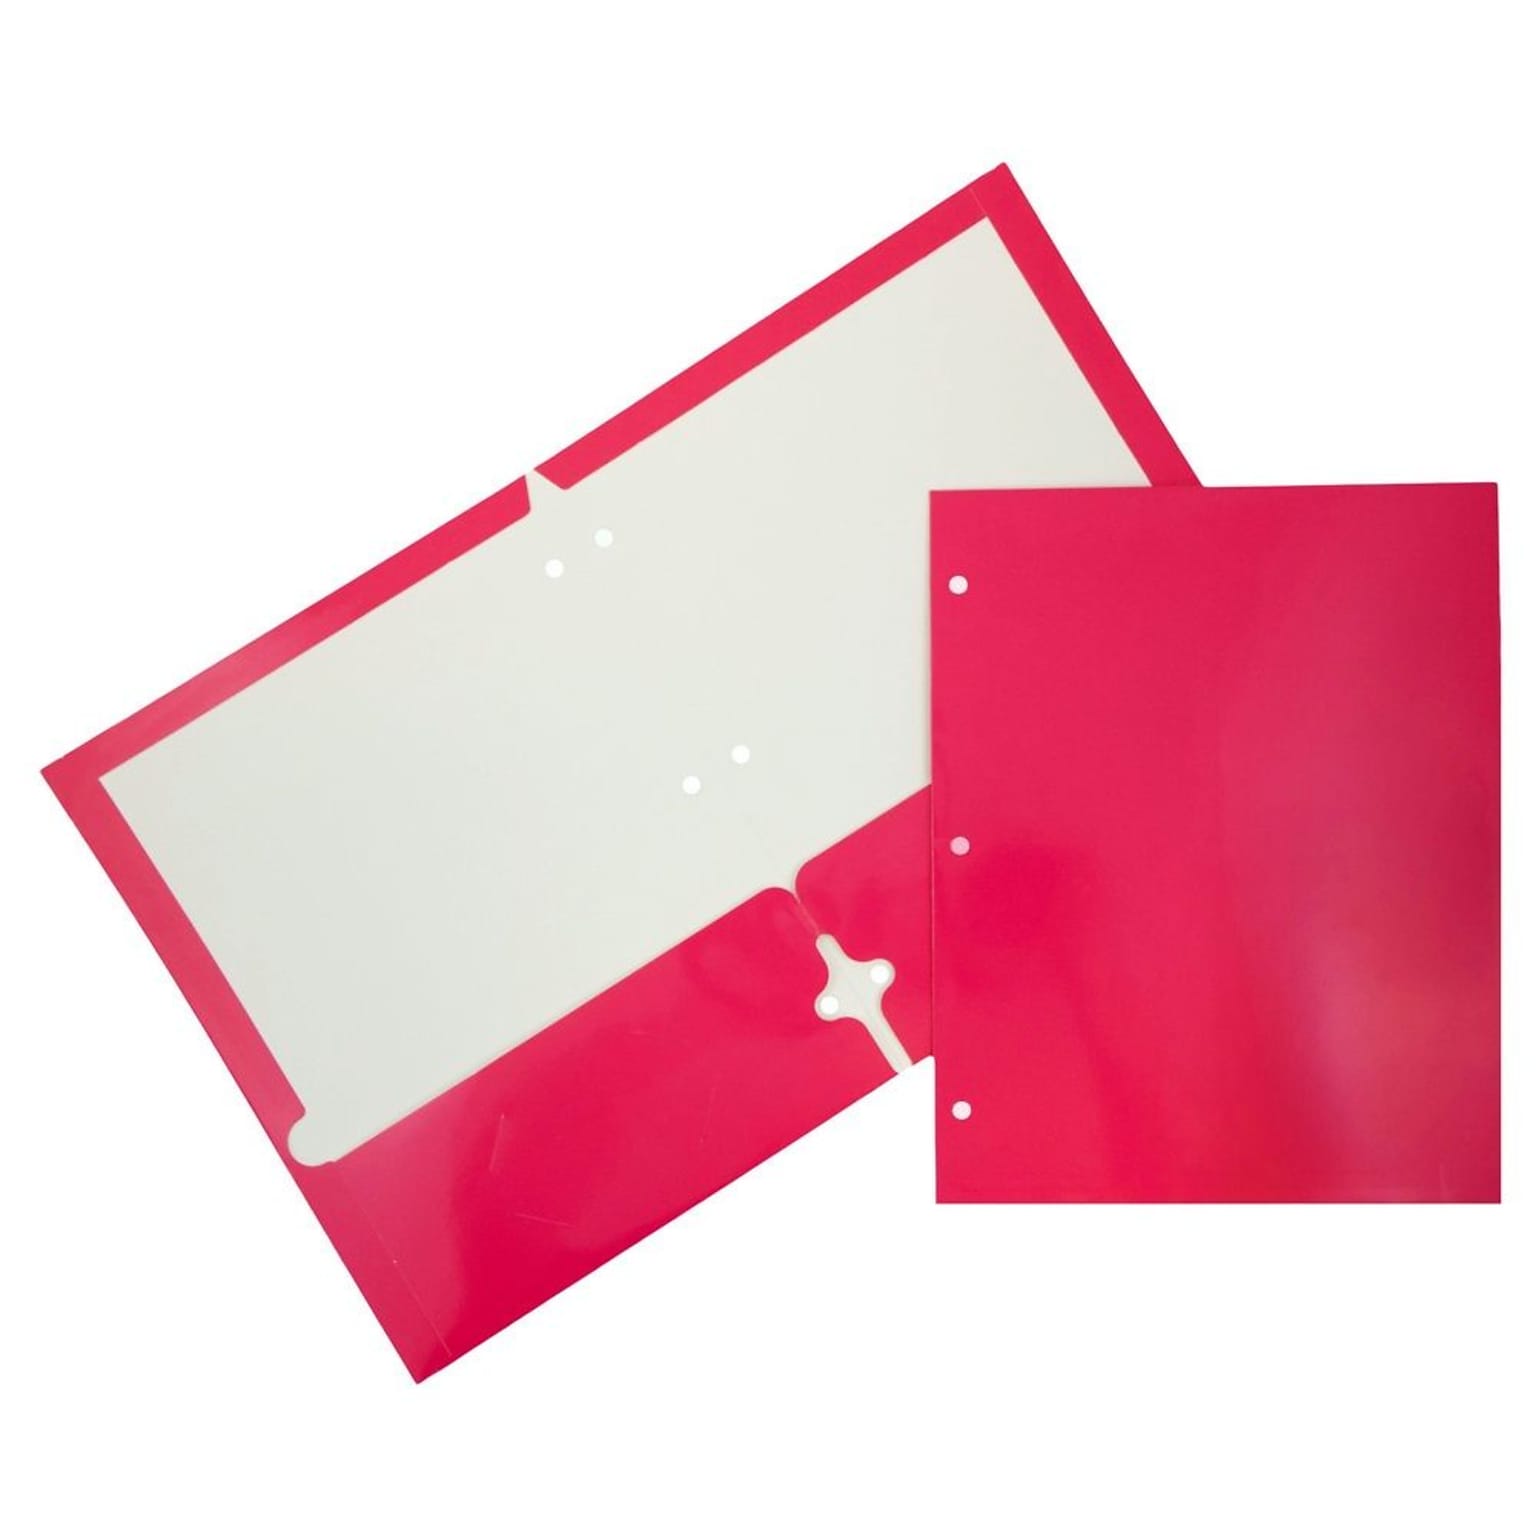 JAM Paper® Laminated Glossy 3 Hole Punch Two-Pocket School Folders, Fuchsia Hot Pink, Bulk 25/Pack (385GHPFUD)